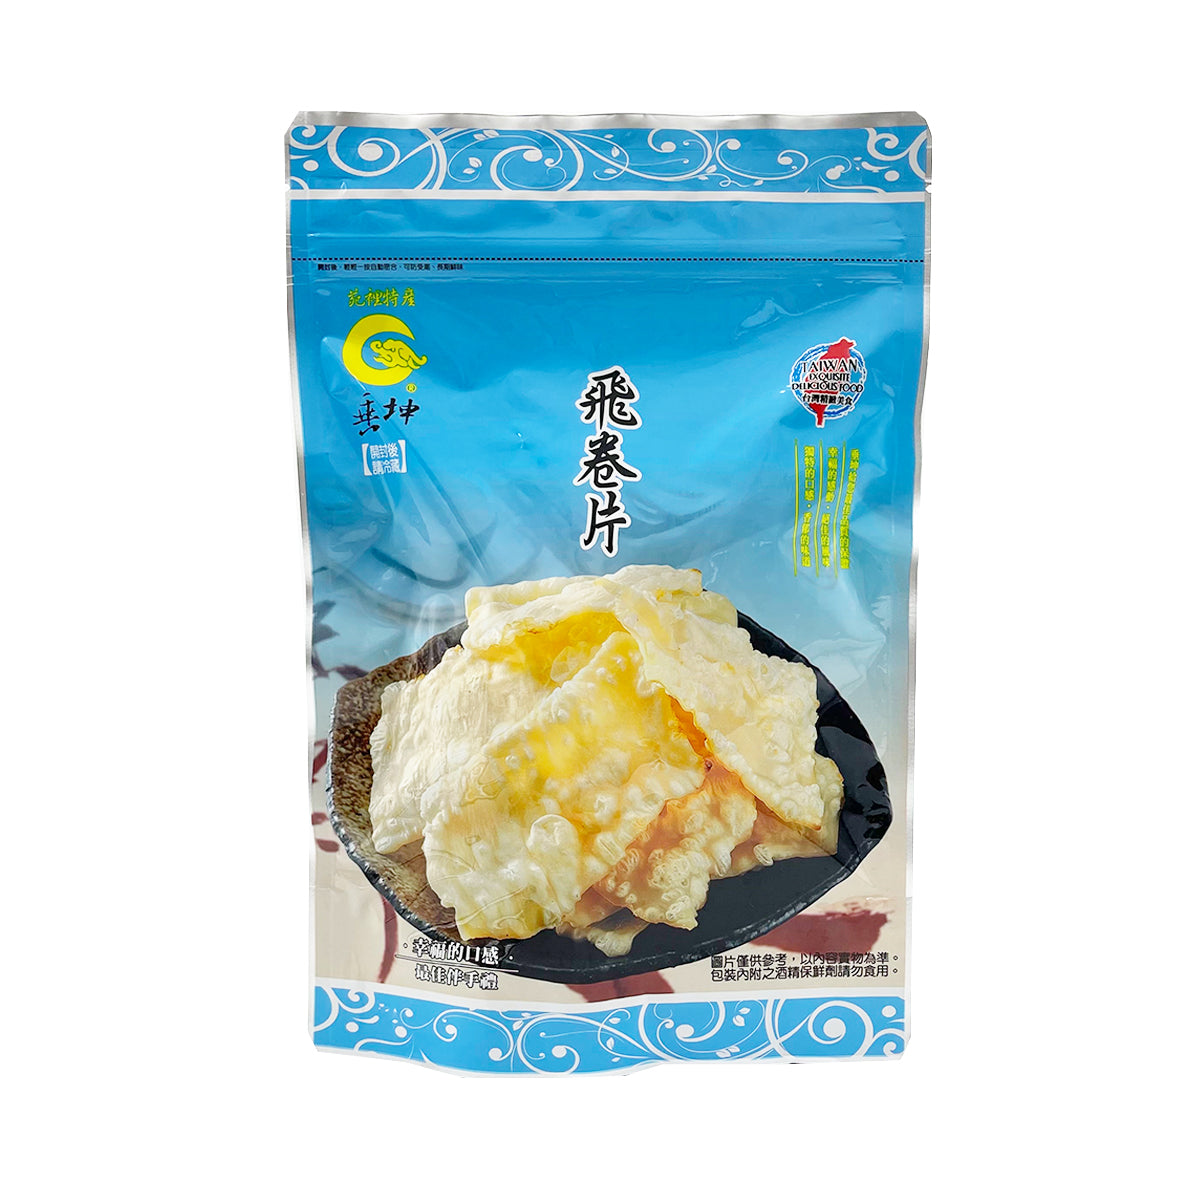 【CHUEI KUN】 Dried Squid Slice 90g